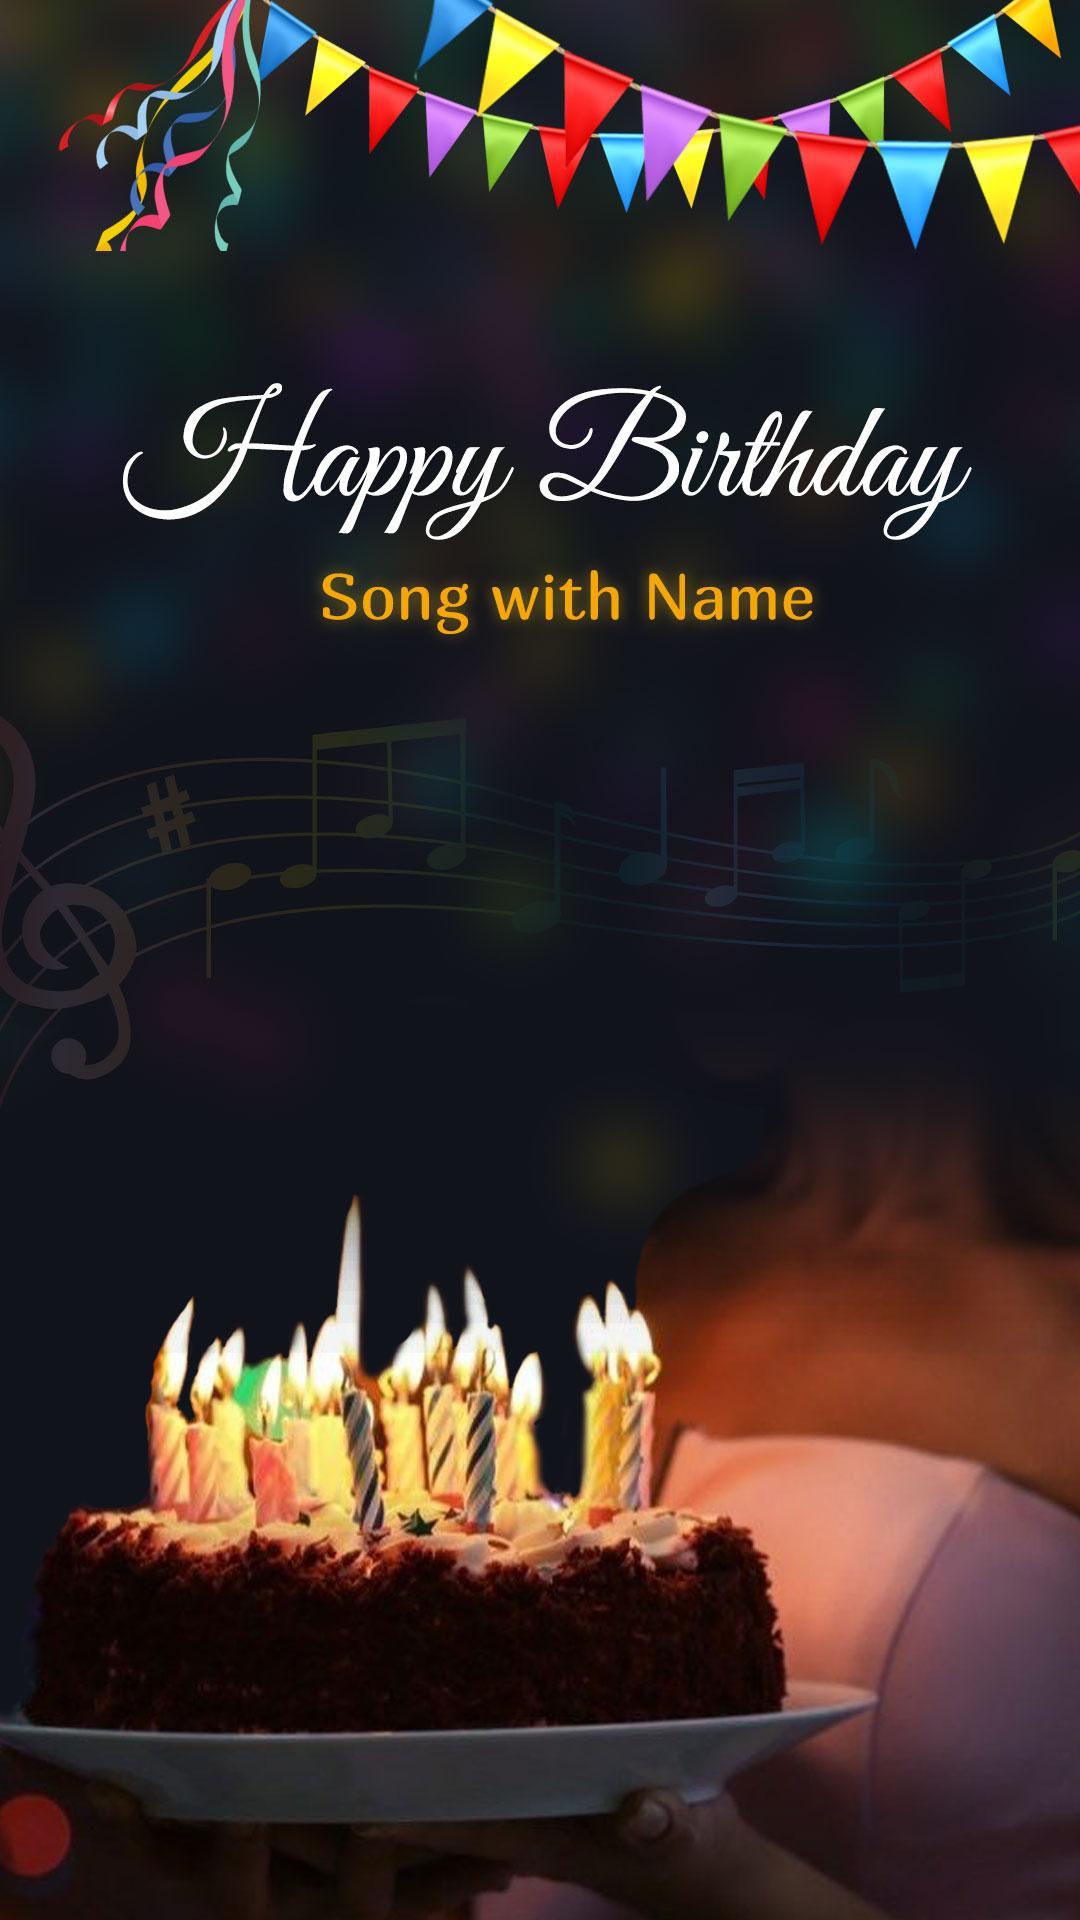 Happy birthday song